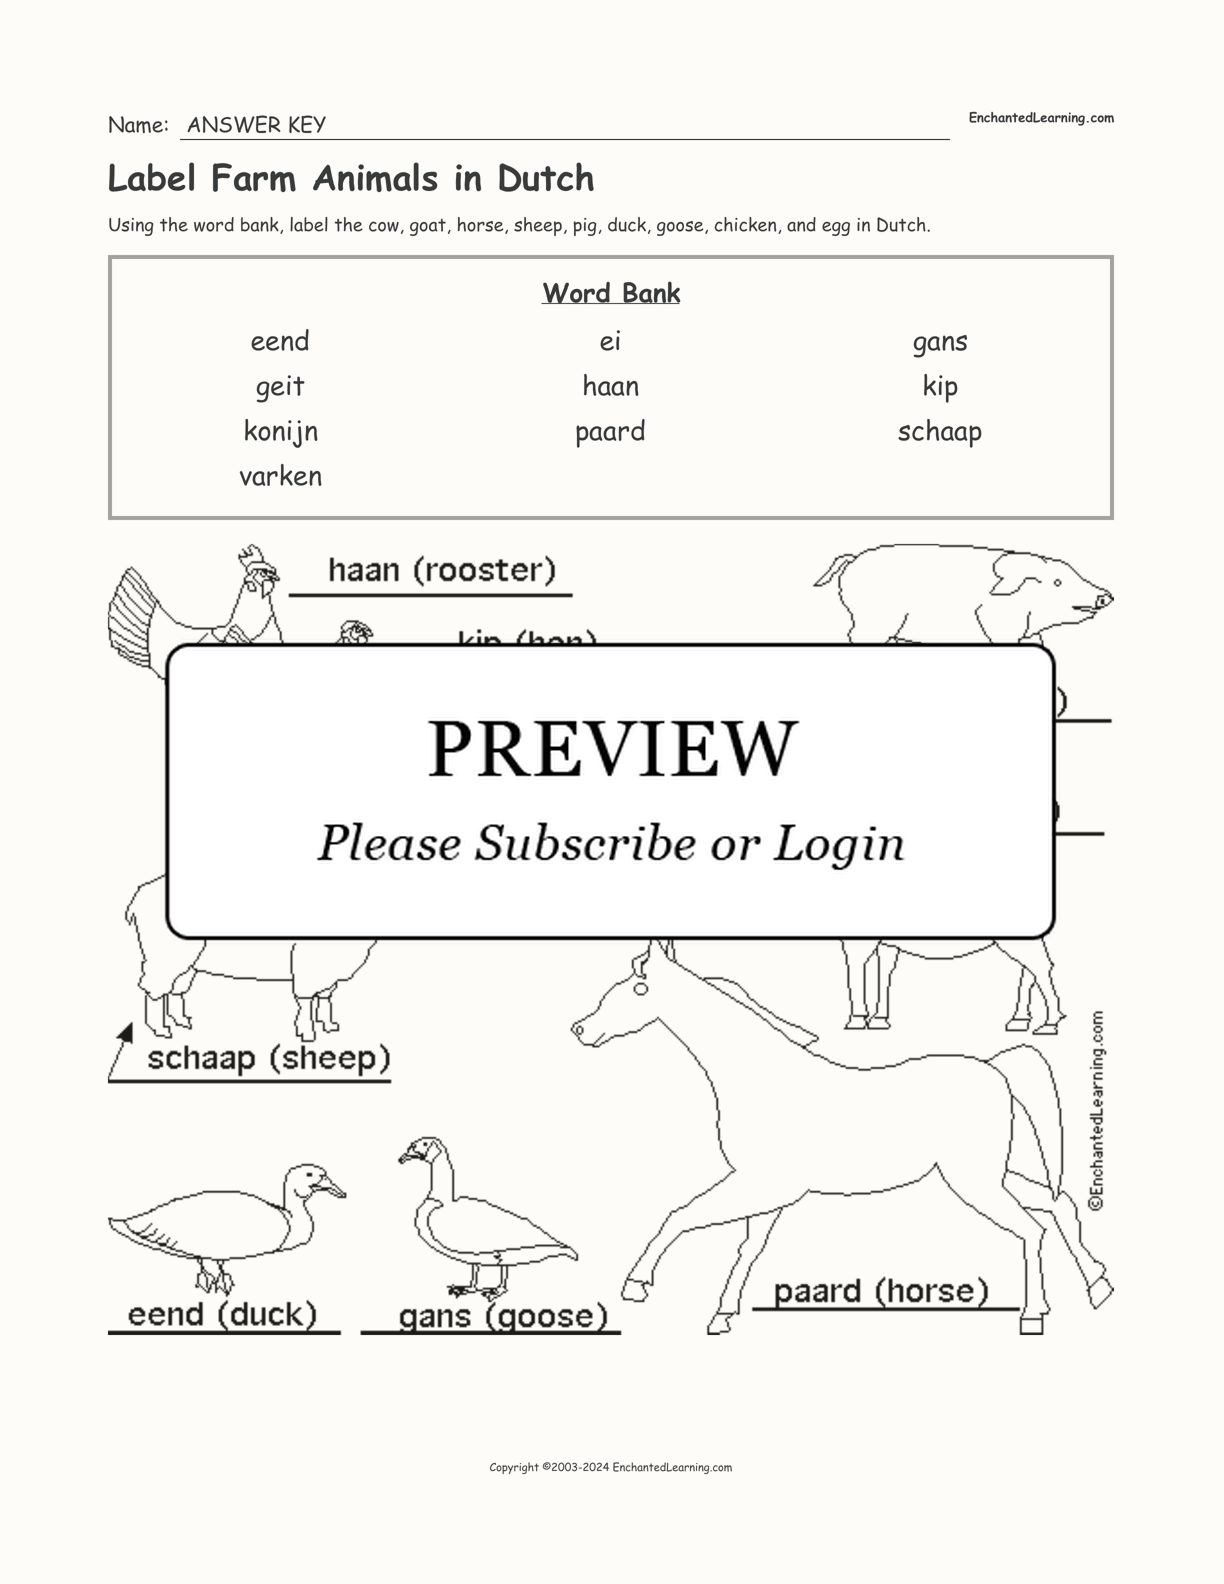 Label Farm Animals in Dutch interactive worksheet page 2